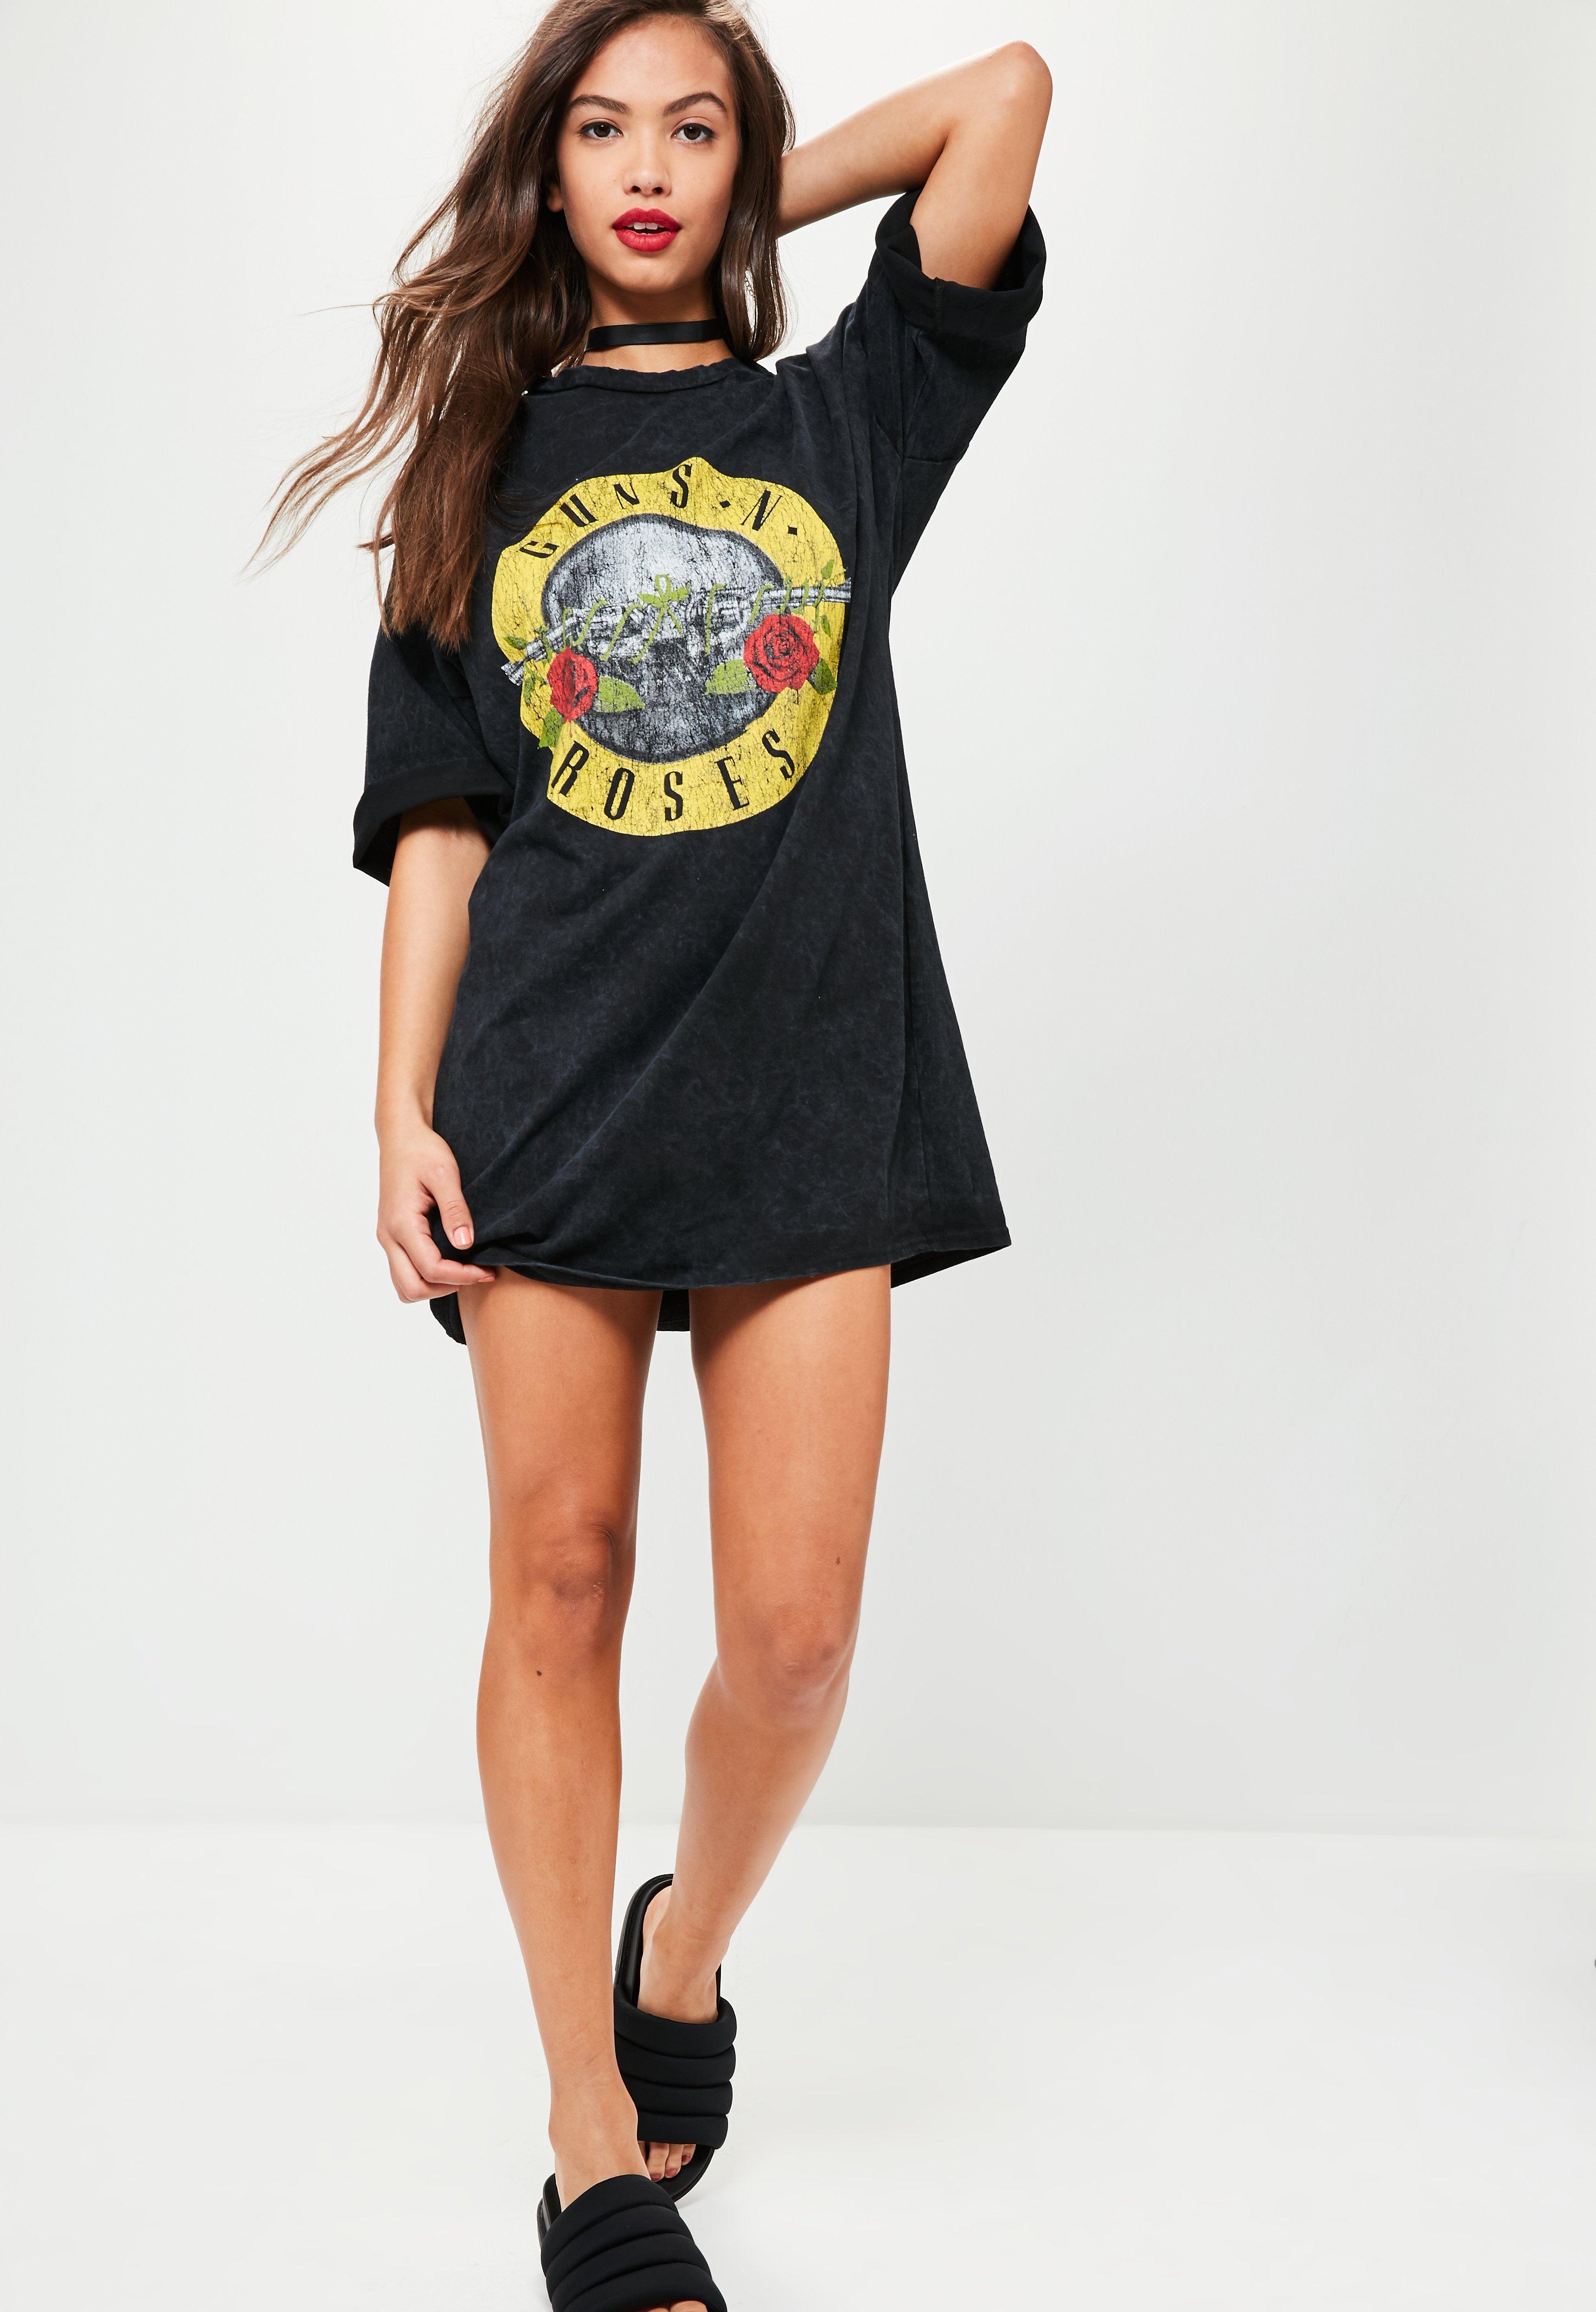 Missguided Guns N Roses T-shirt Dress ...